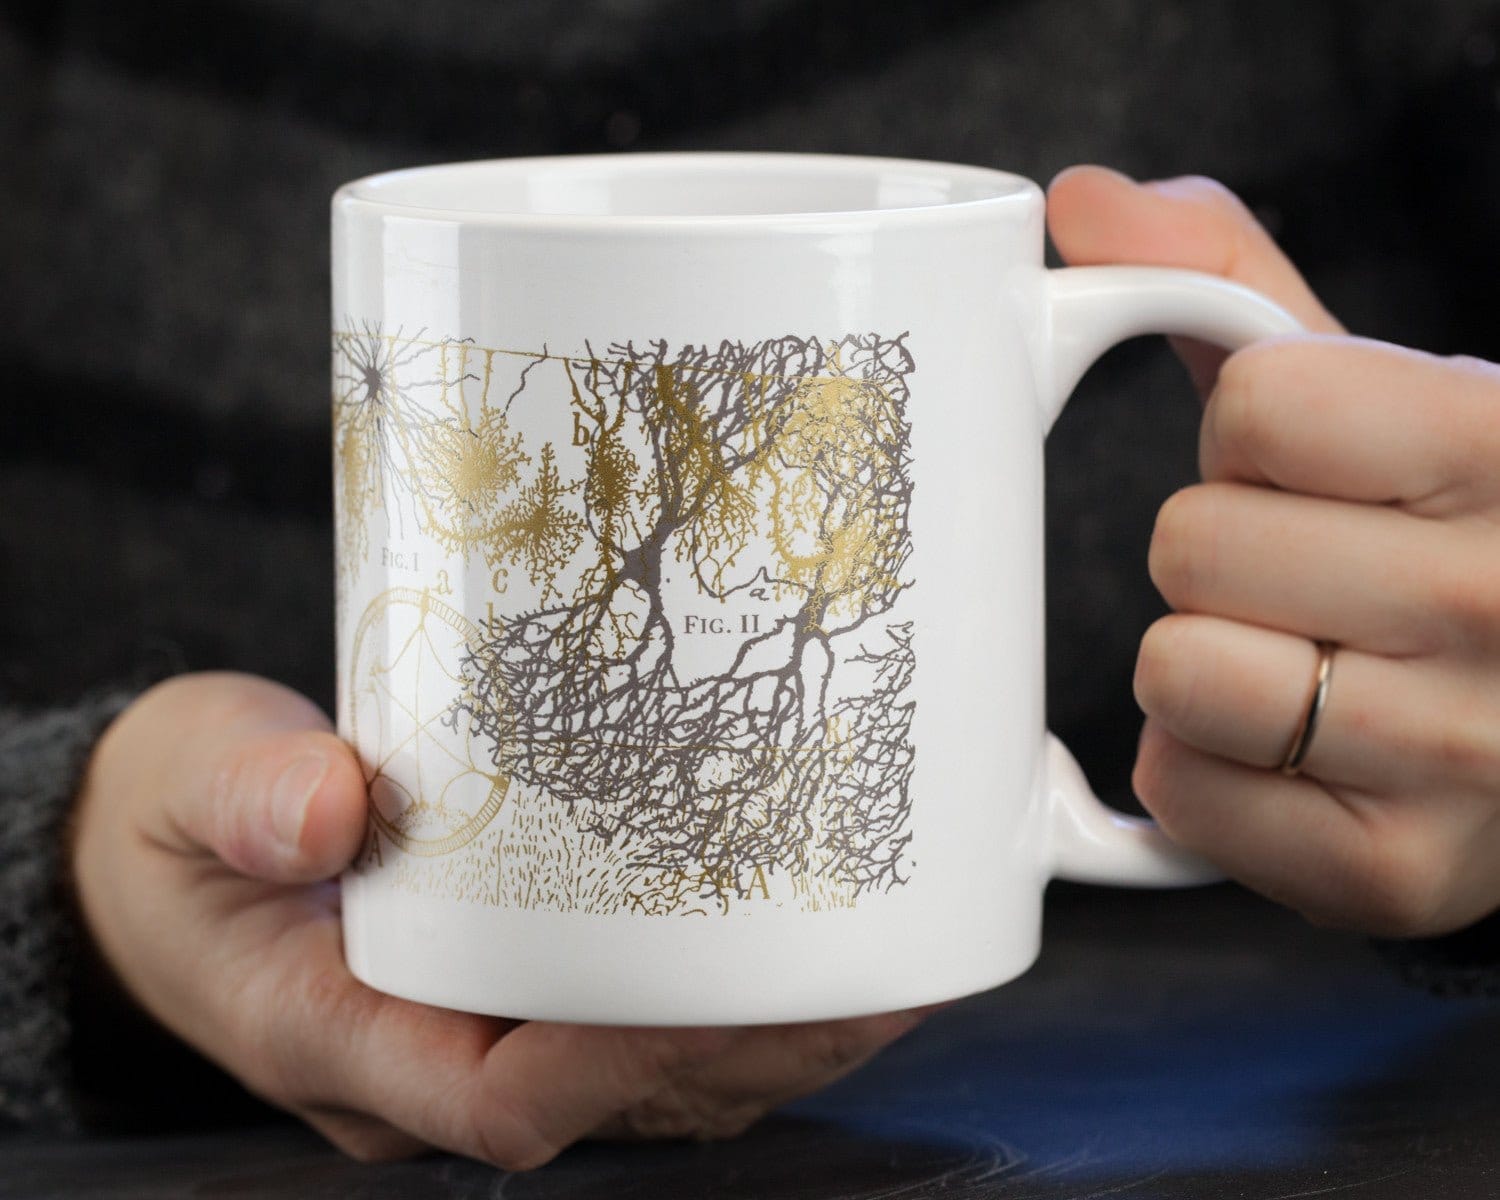 Vacuum Insulated Coffee Mug Stainless Steel Tumbler – neuronium